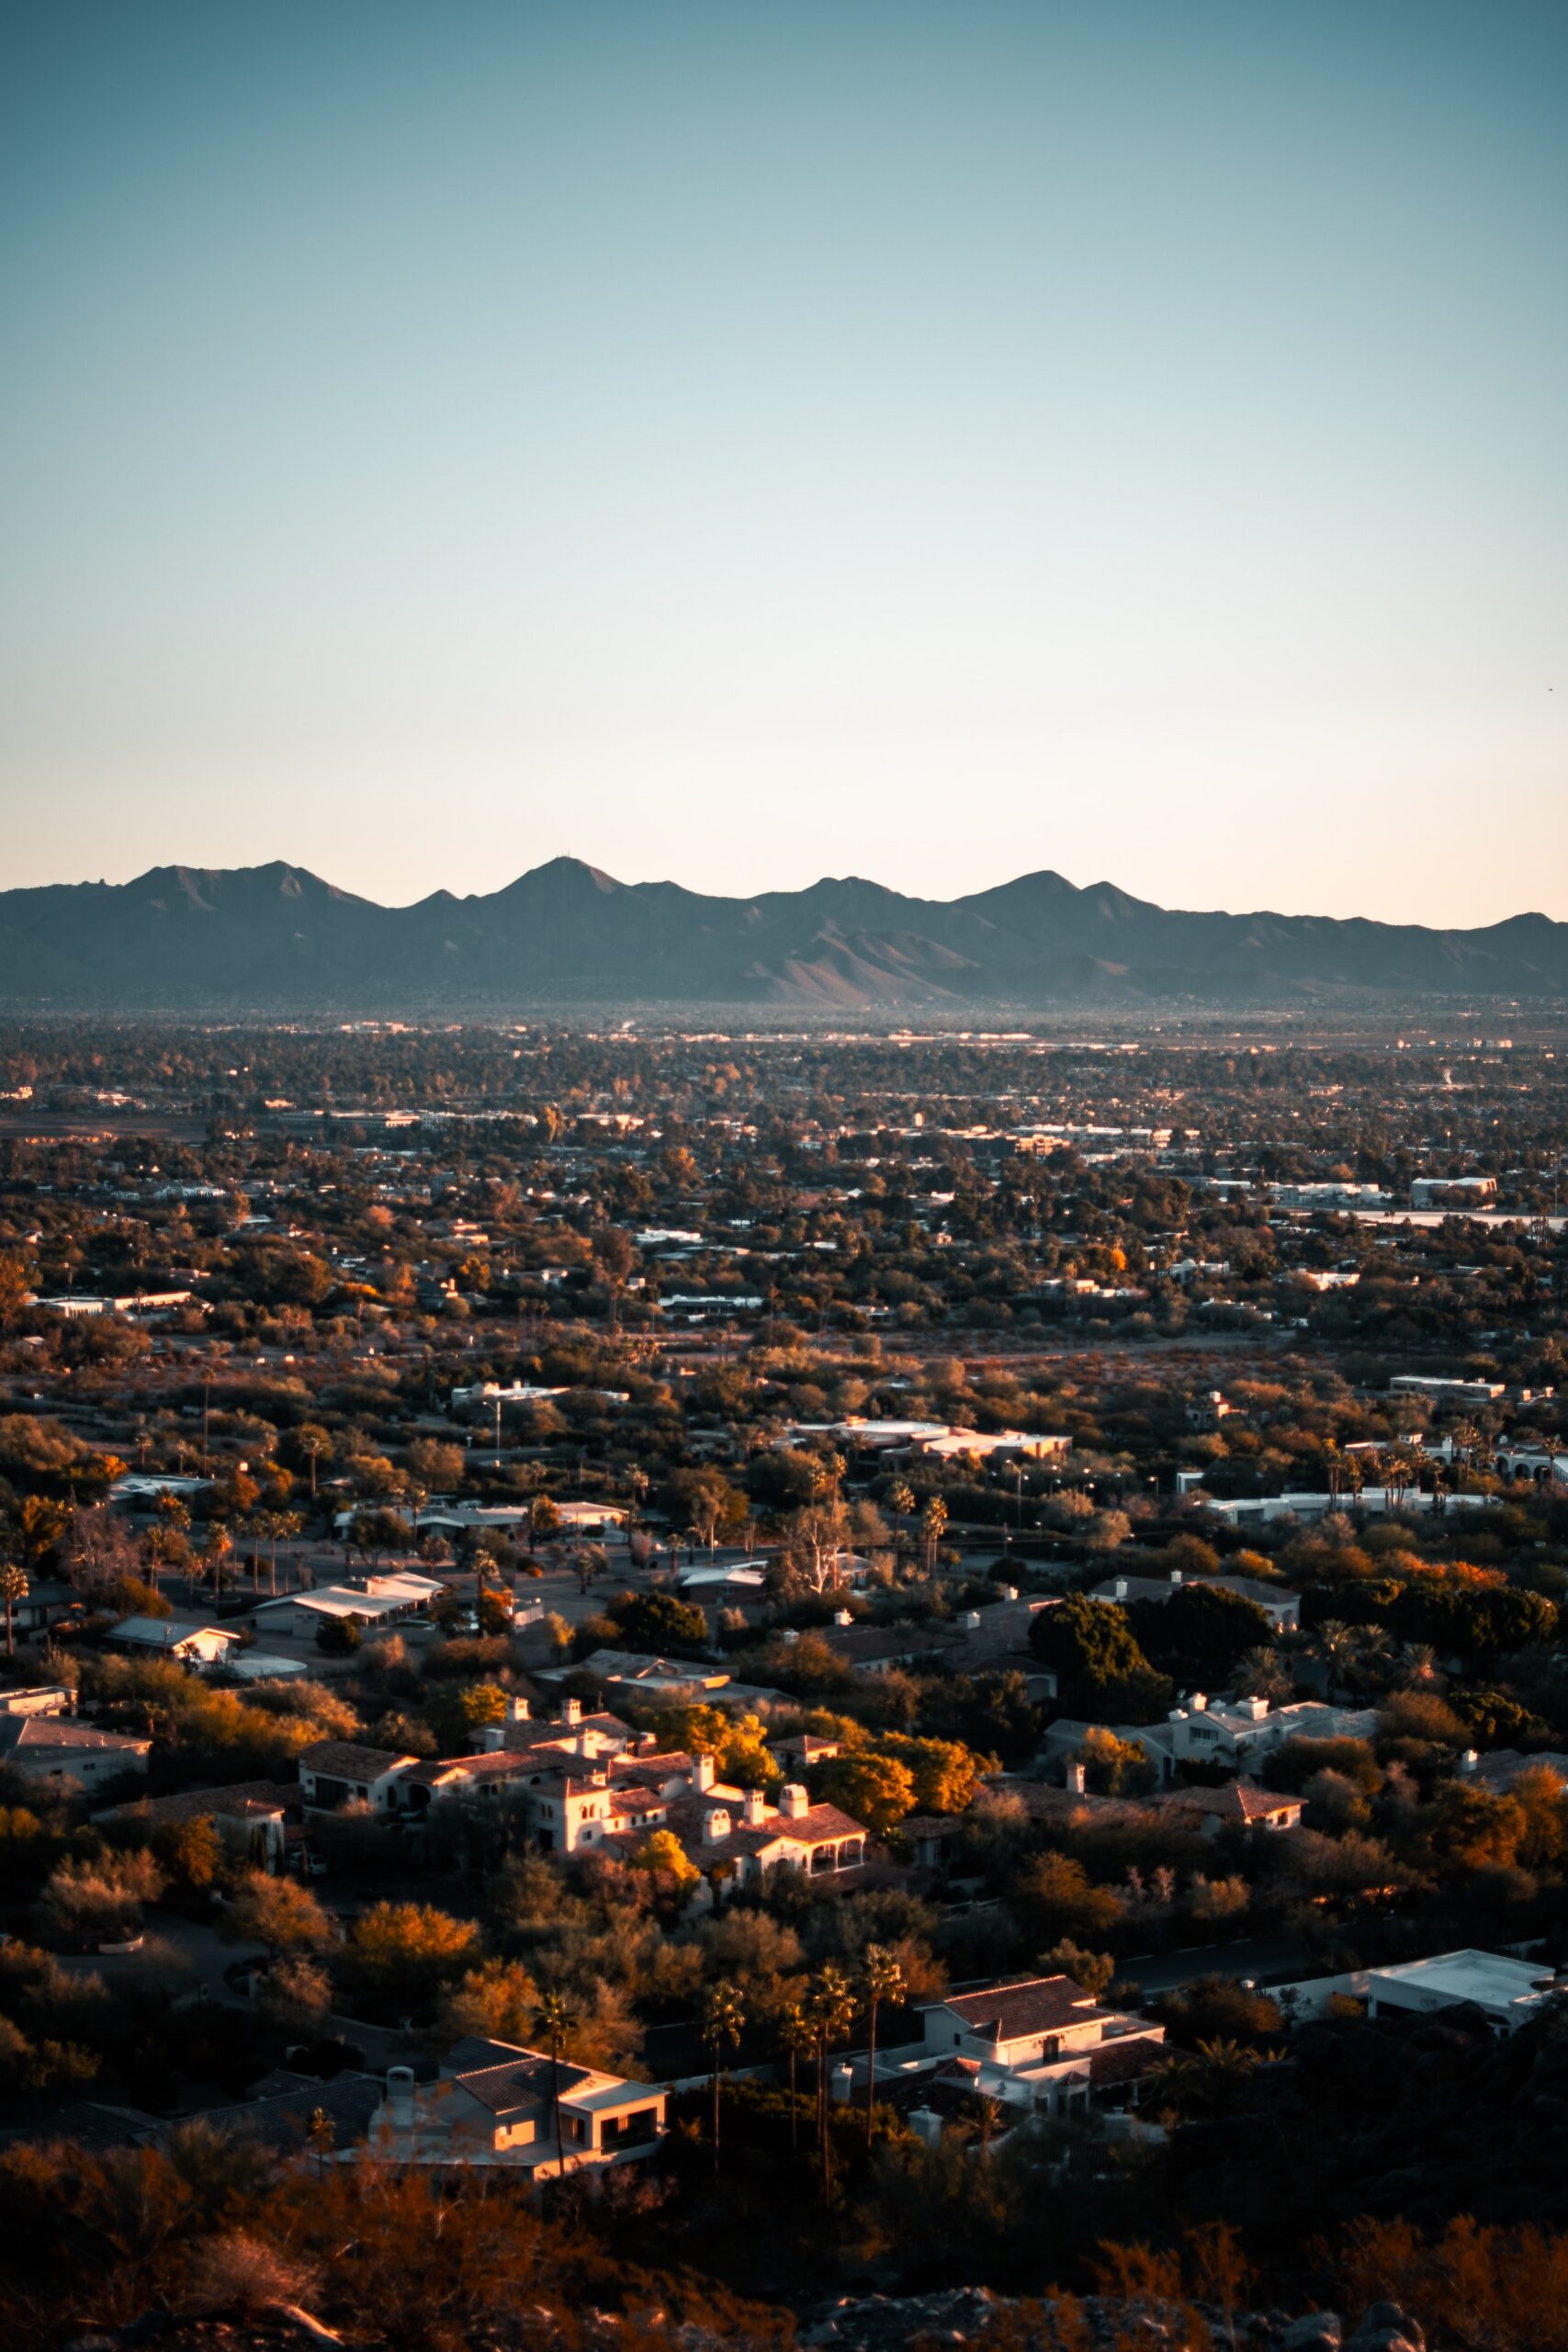 Aerial view of Phoenix, Arizona